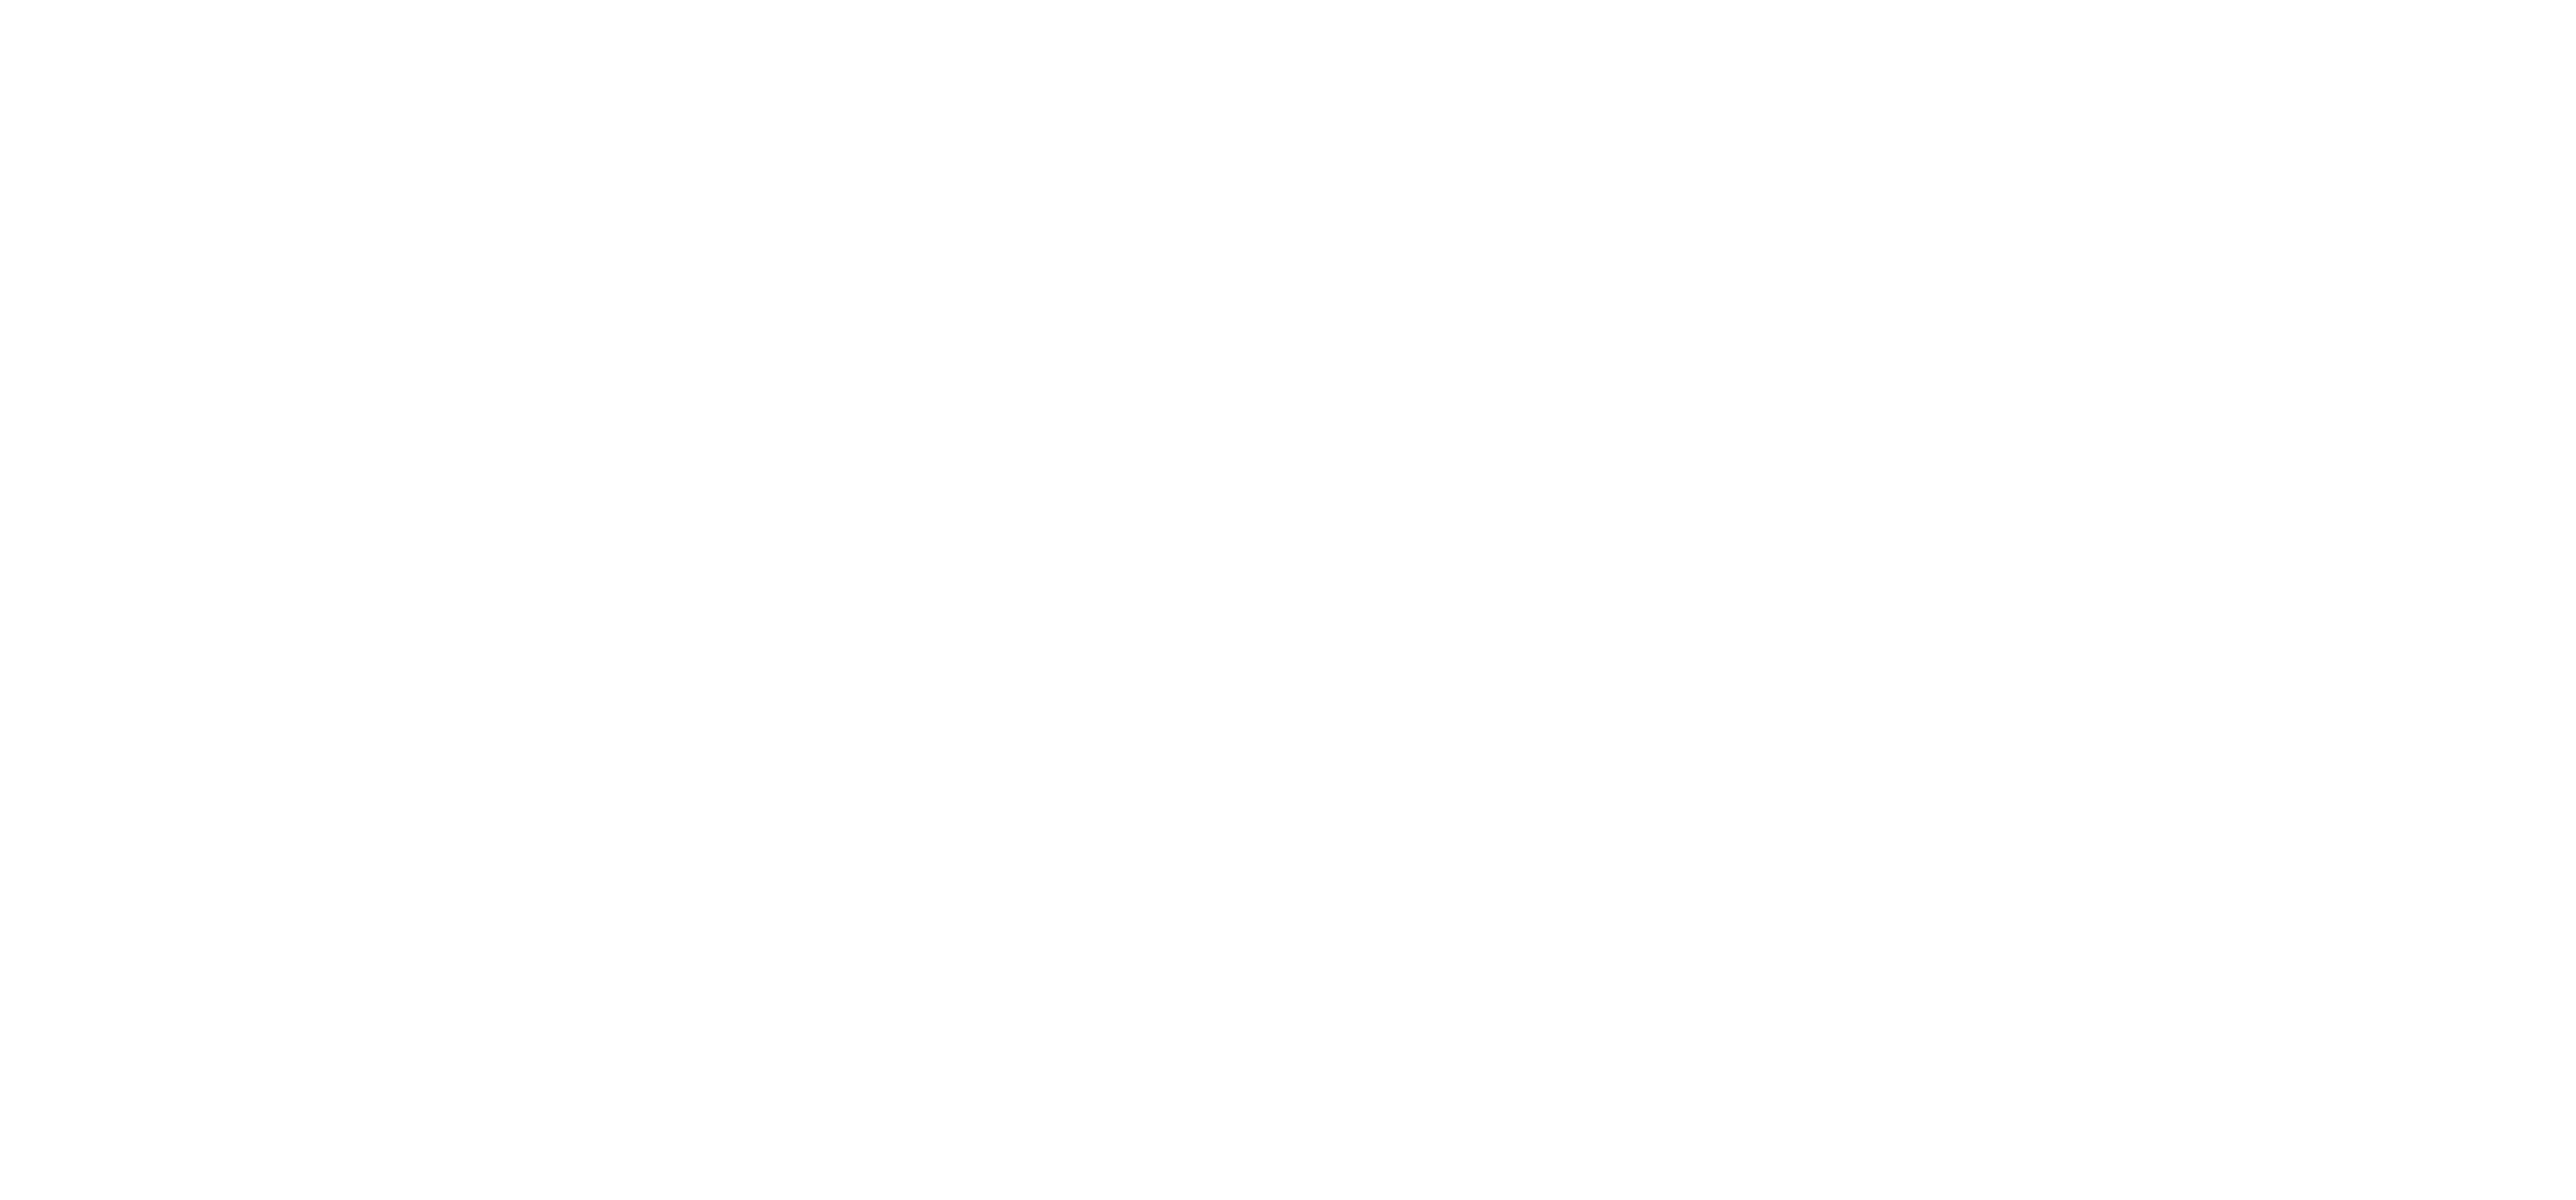 CYGNA CARE SERVICES